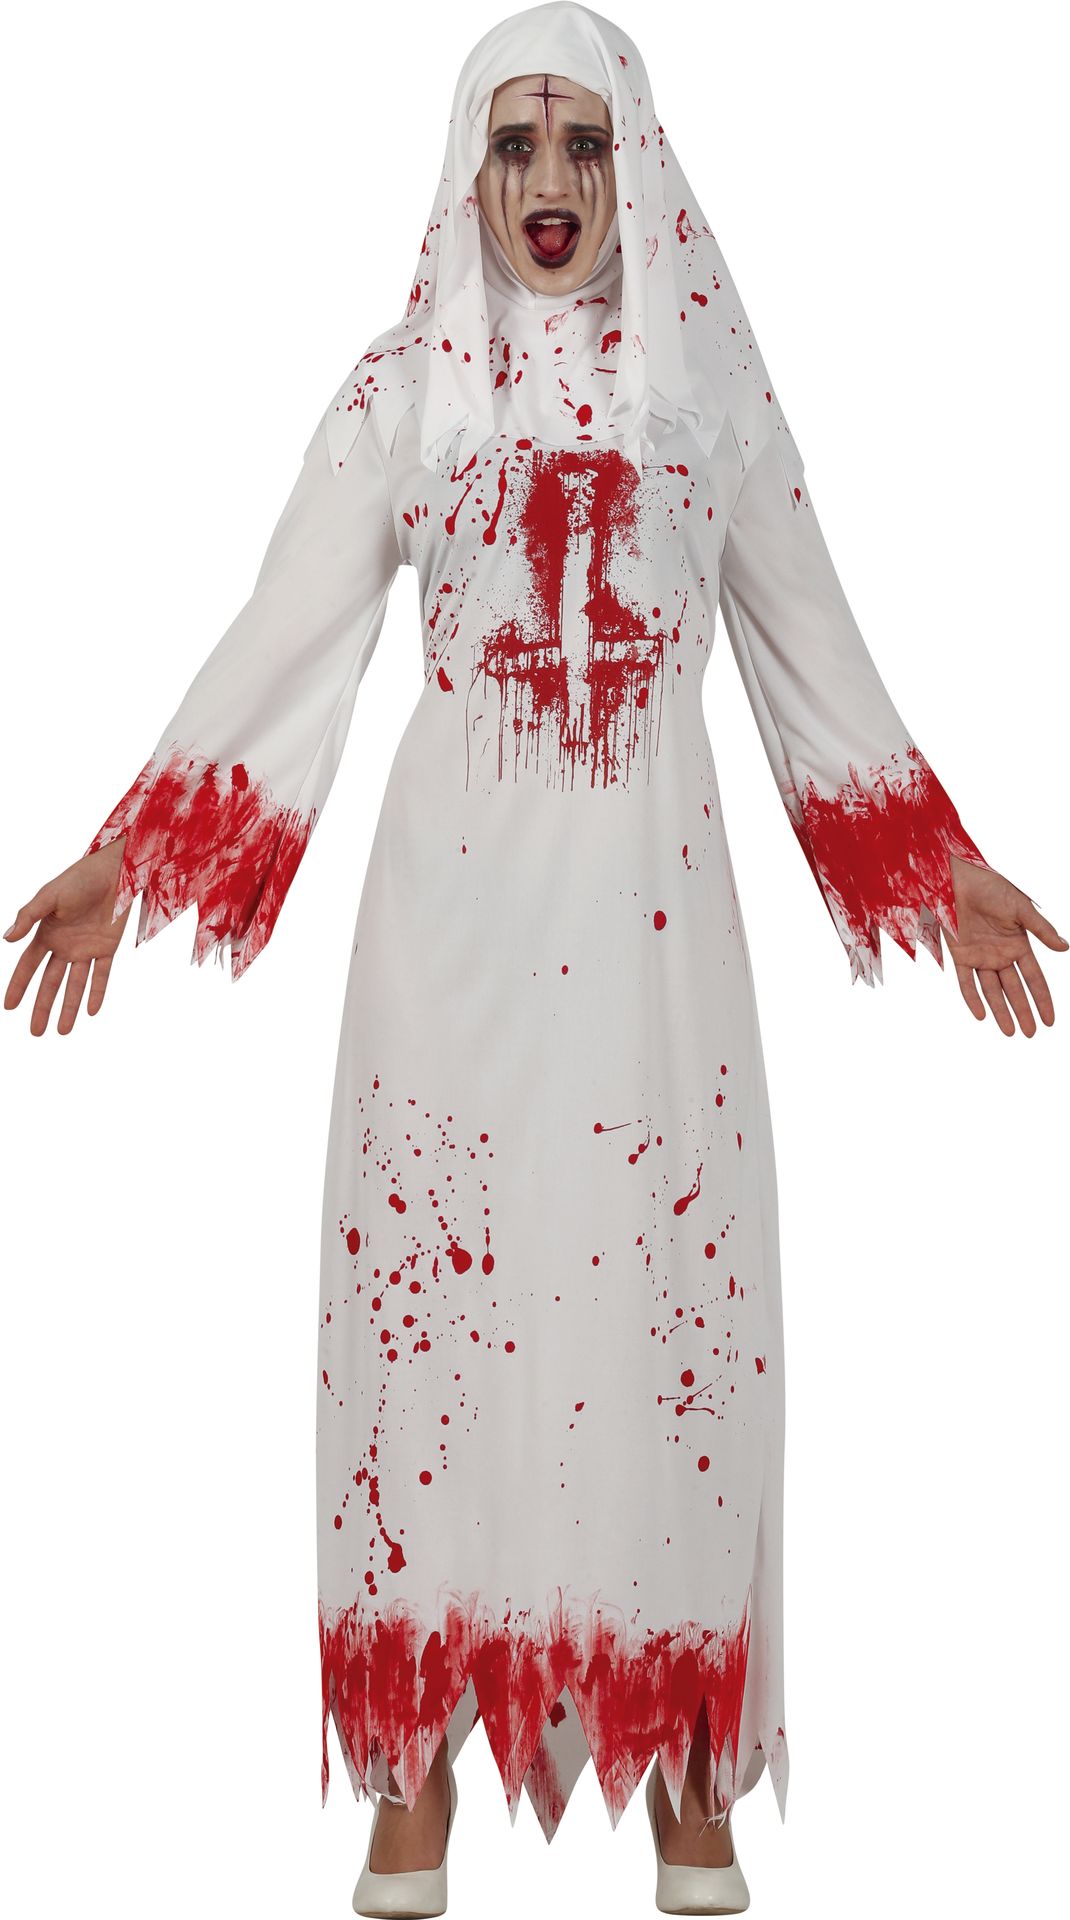 Bloederige zombie non jurk